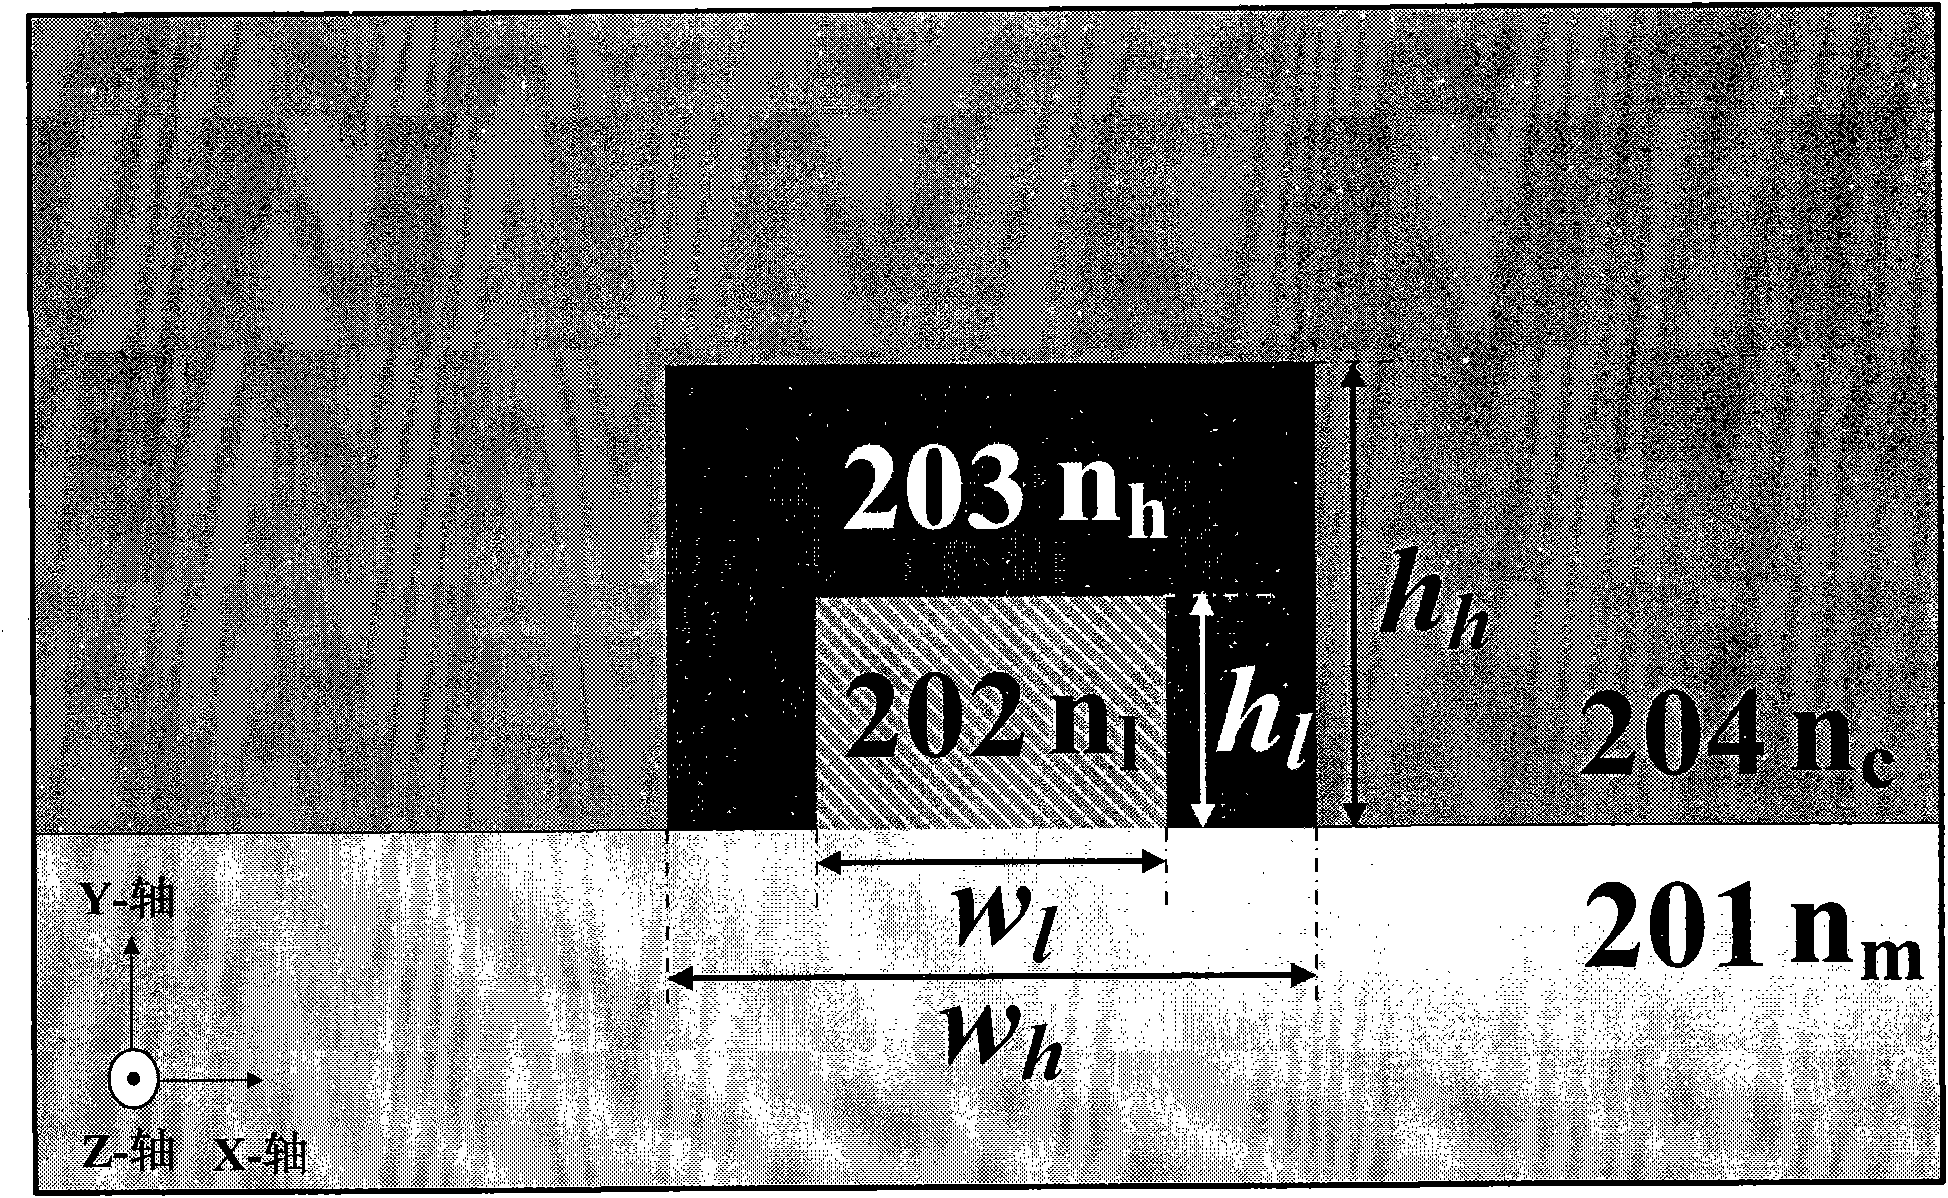 Low-loss medium loaded surface plasmon excimer optical waveguide